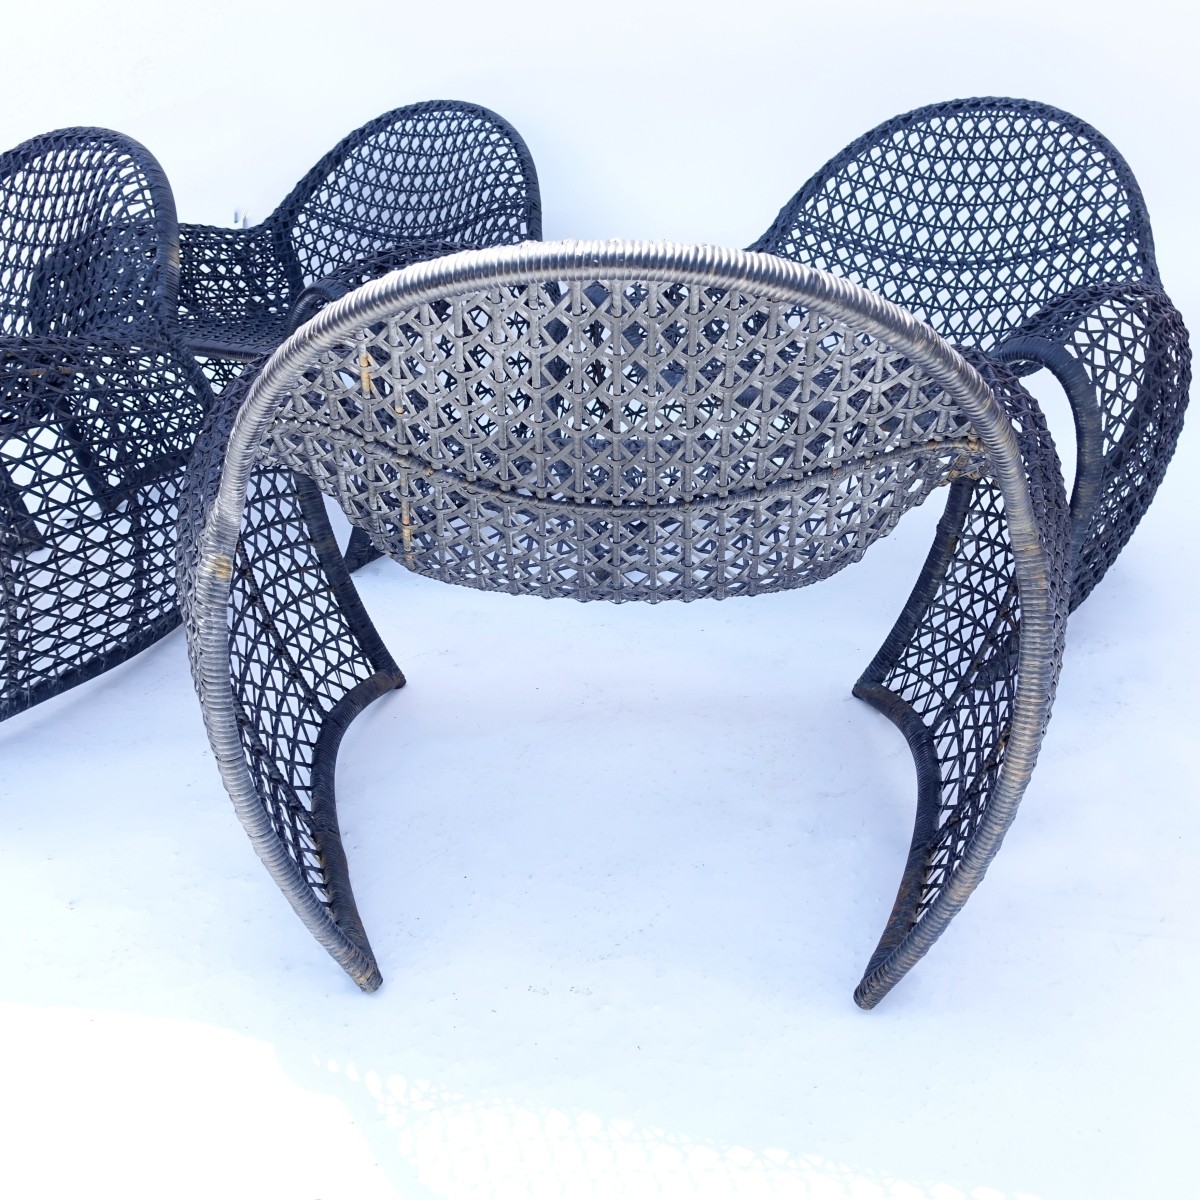 4 Modern Wicker Chairs